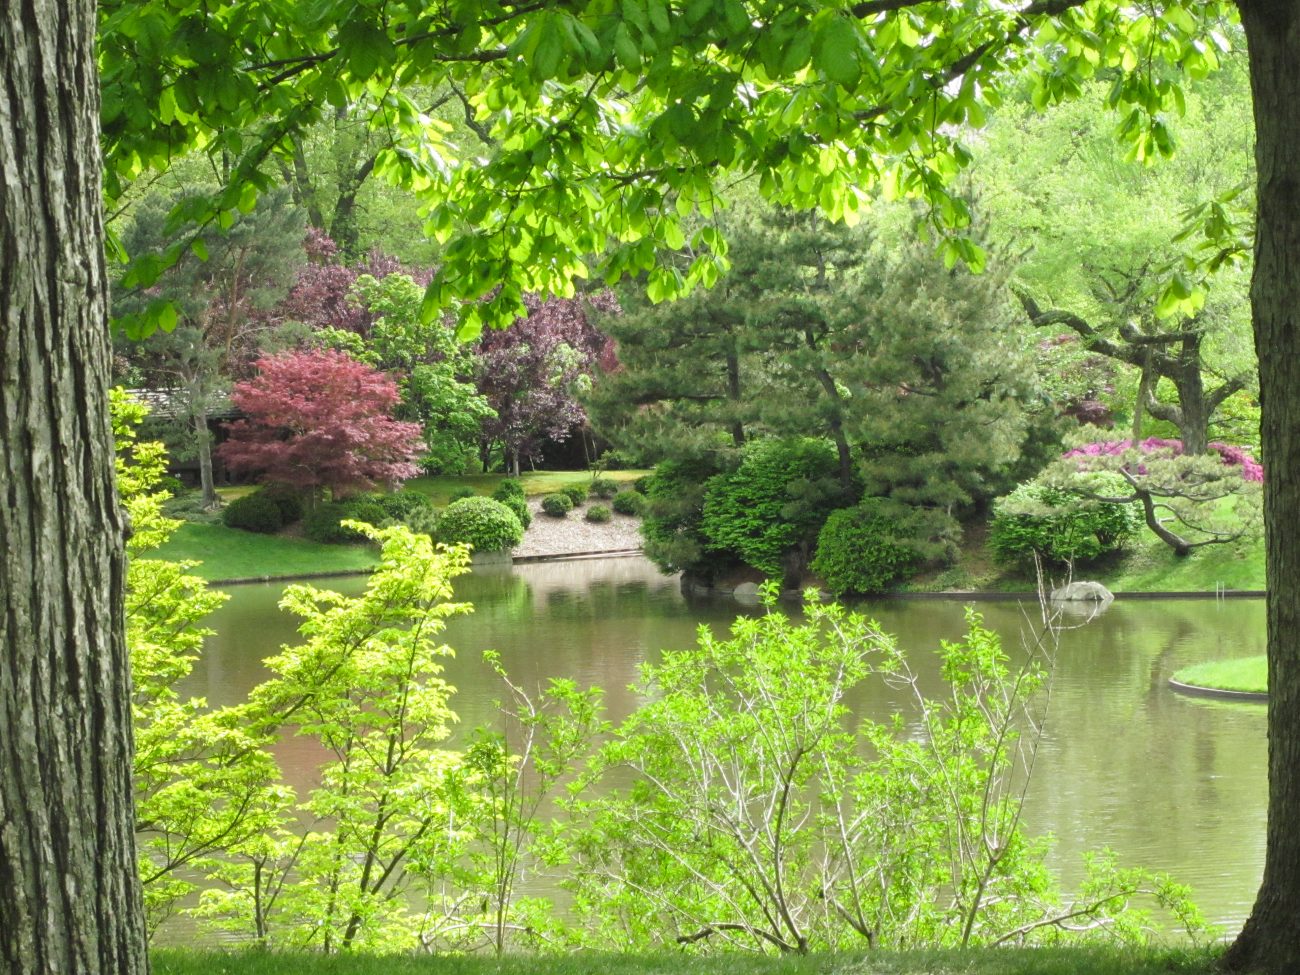 The Japanese Garden at the Missouri Botanical Garden